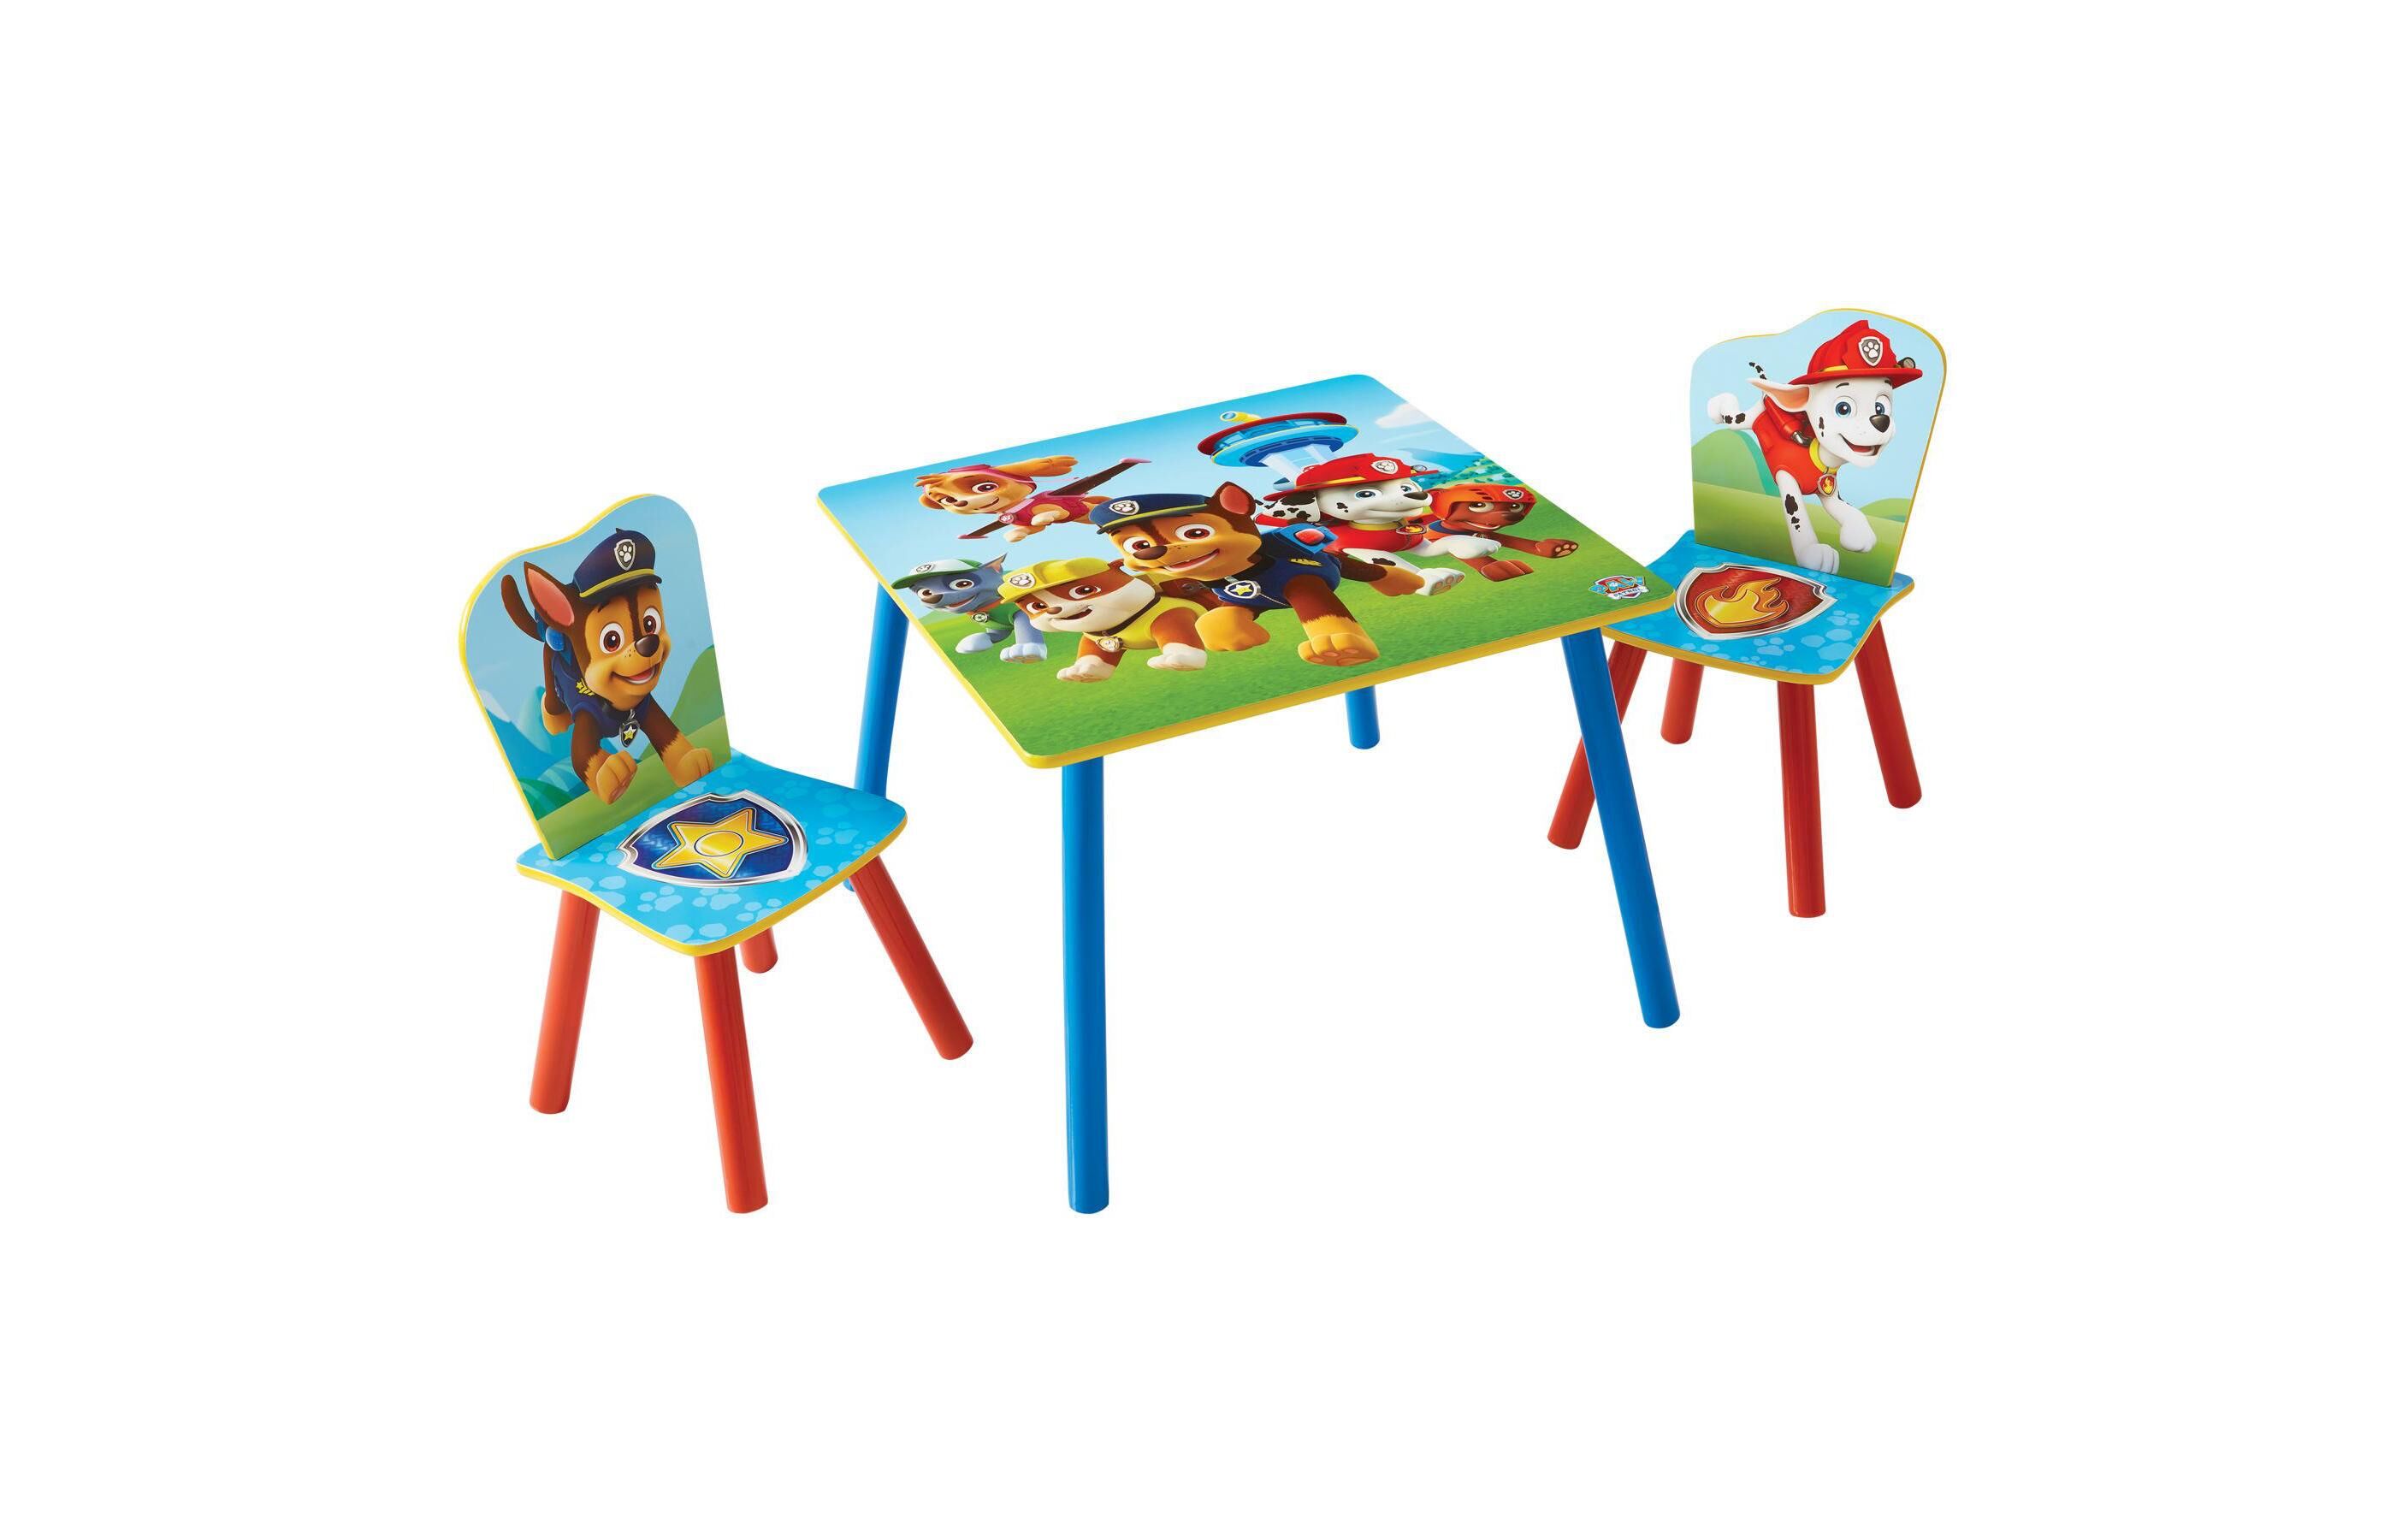 Moose Kindersitzgruppe »moose Kindertisch- und Stuhlset Paw« bunt